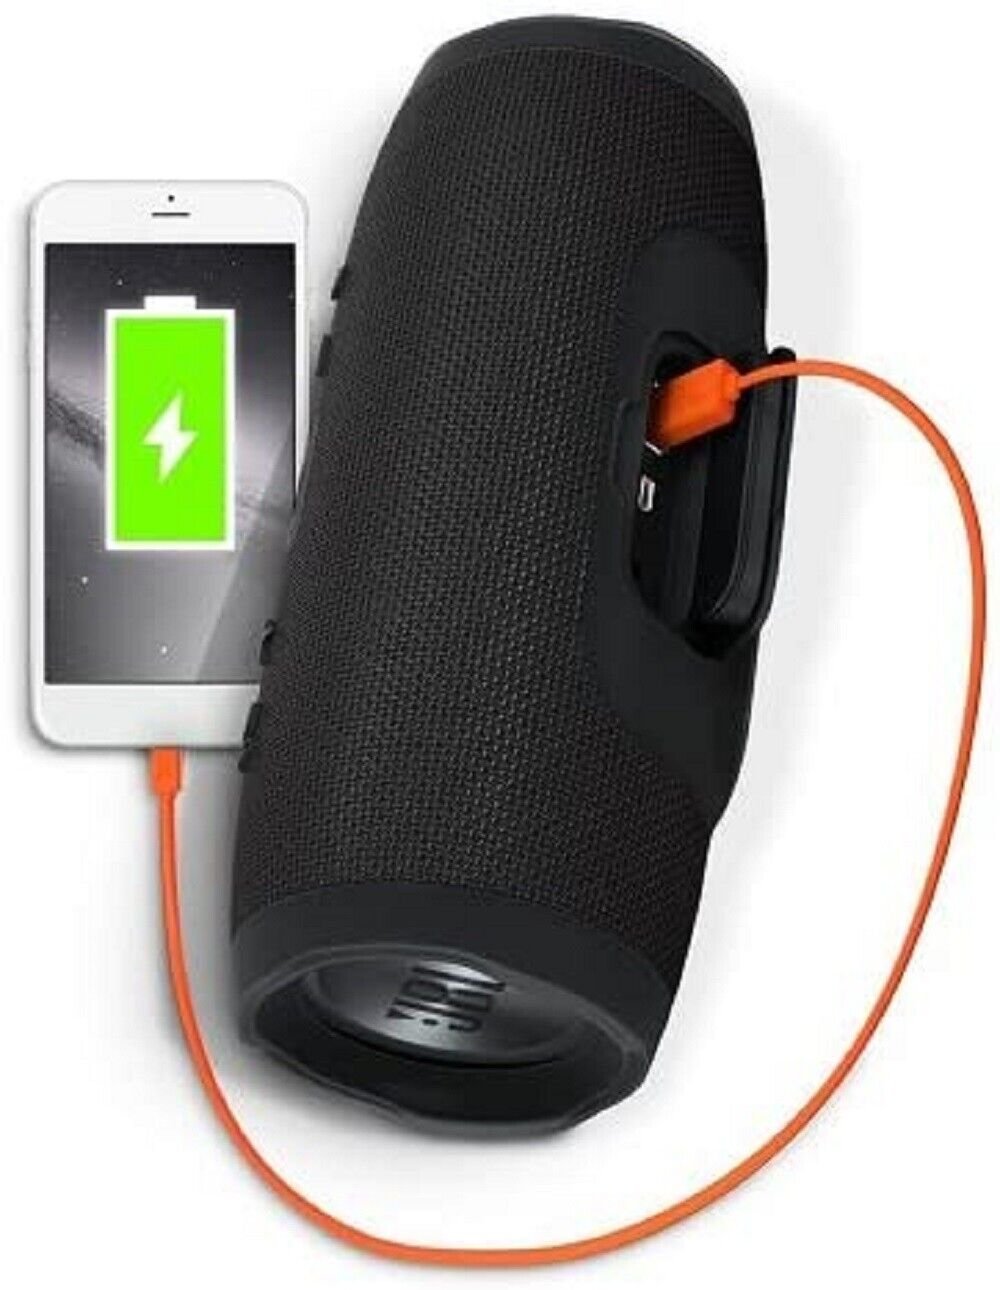 JBL Charge 3 Waterproof Portable Wireless Bluetooth Speaker